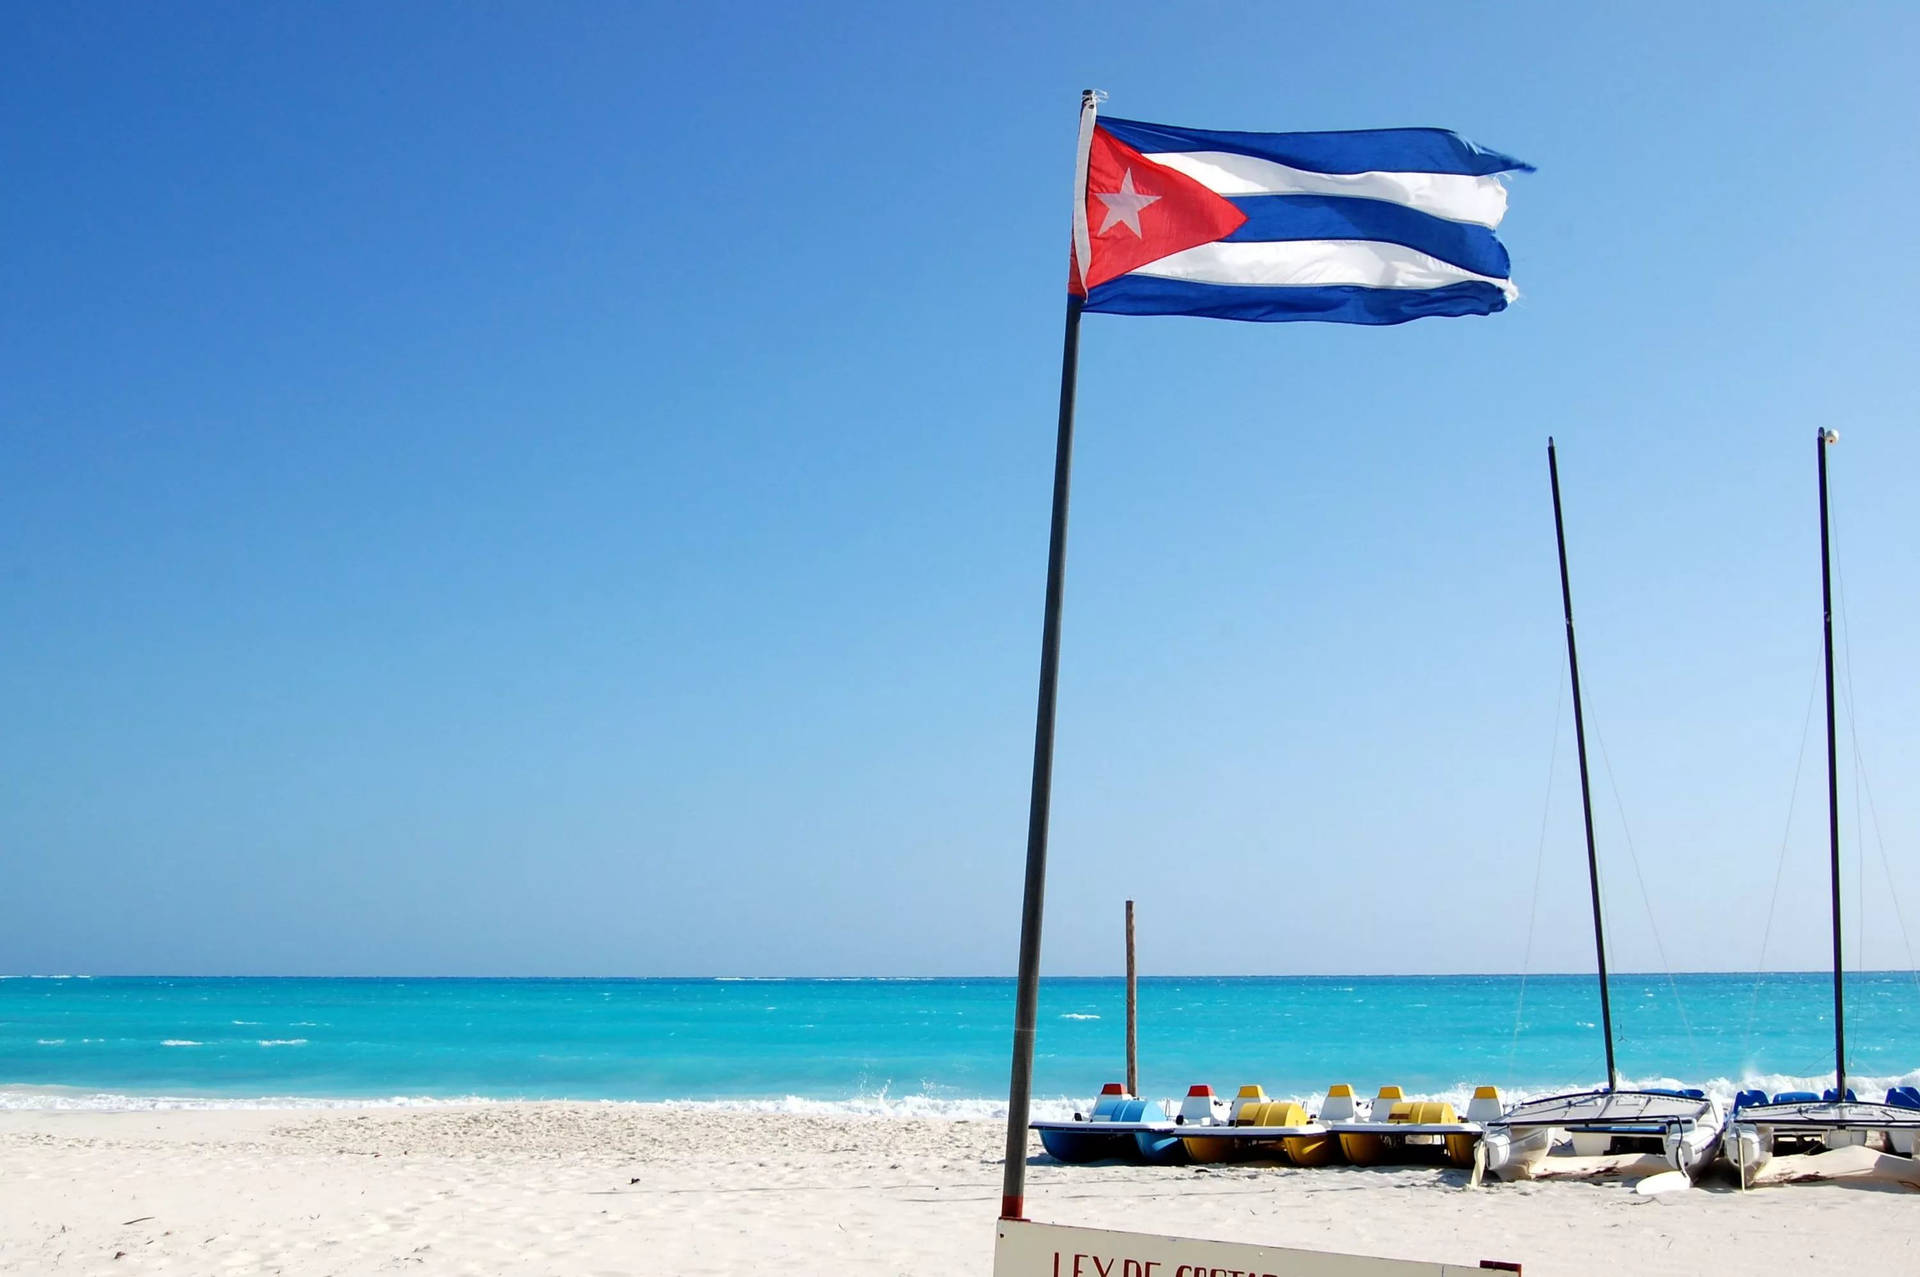 Cuban Flag On Pole Background